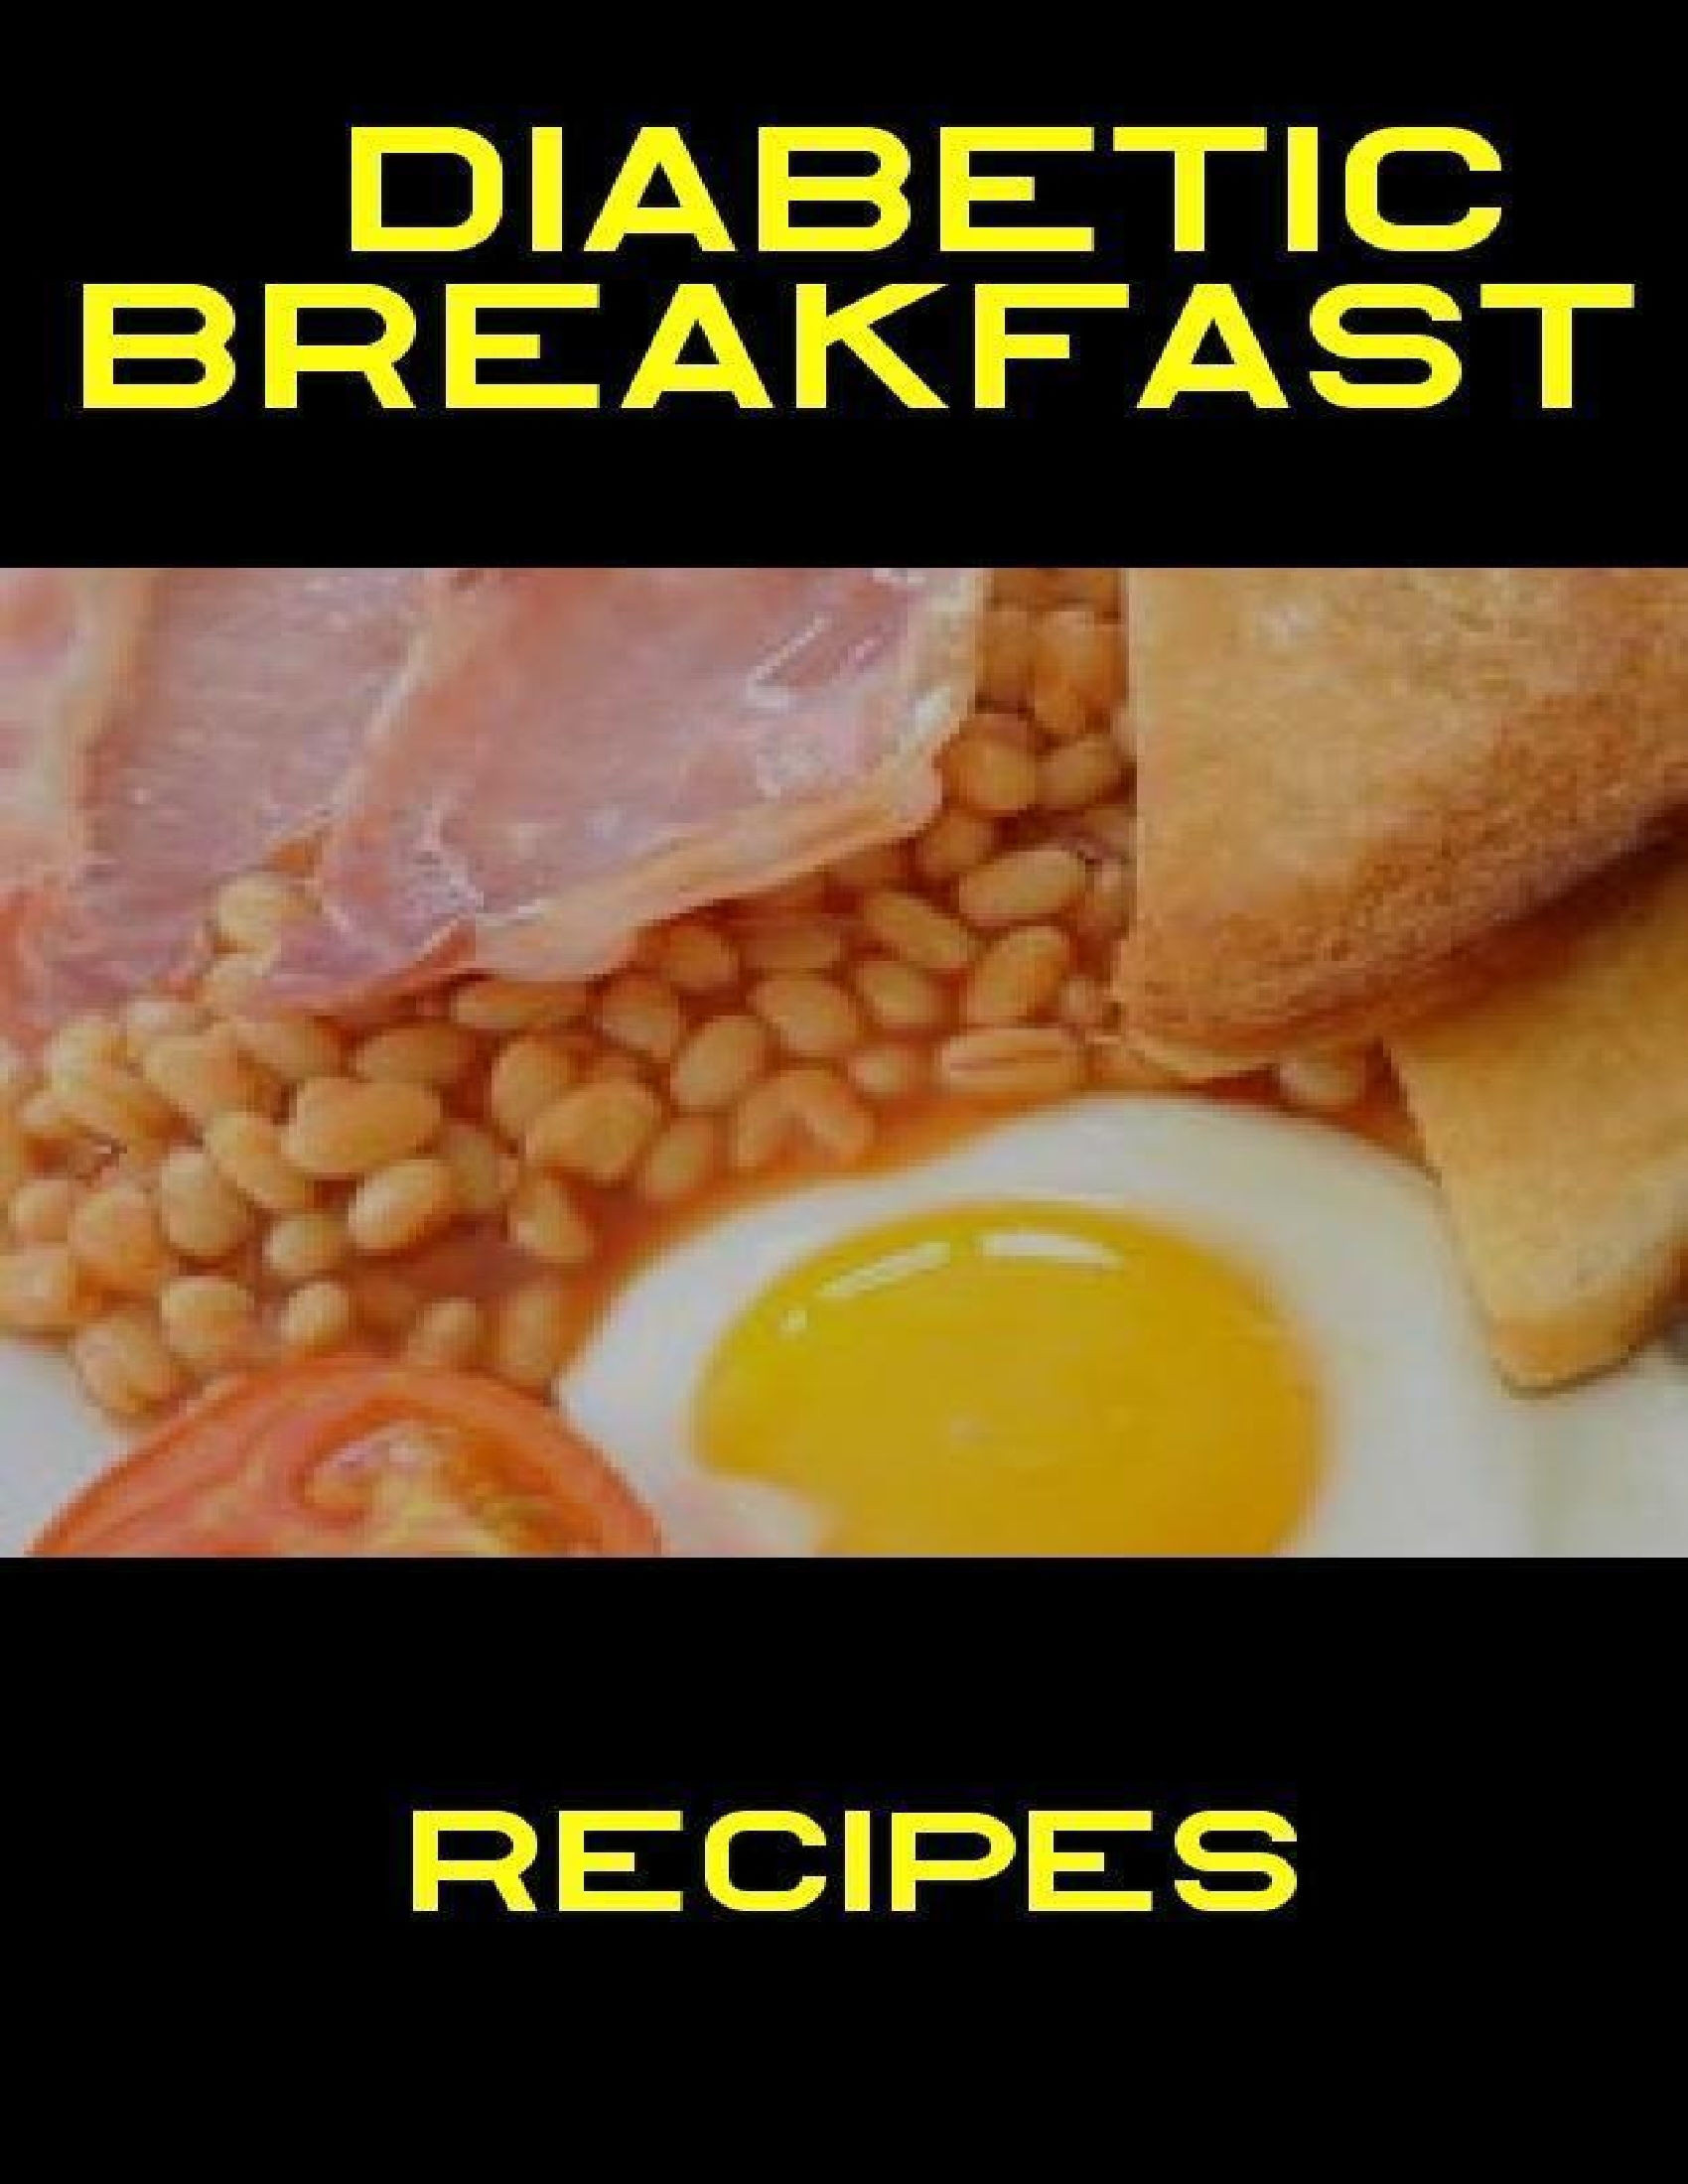 Diabetic Recipes For Breakfast
 Diabetic Breakfast Recipes by Jenny Brown on iBooks